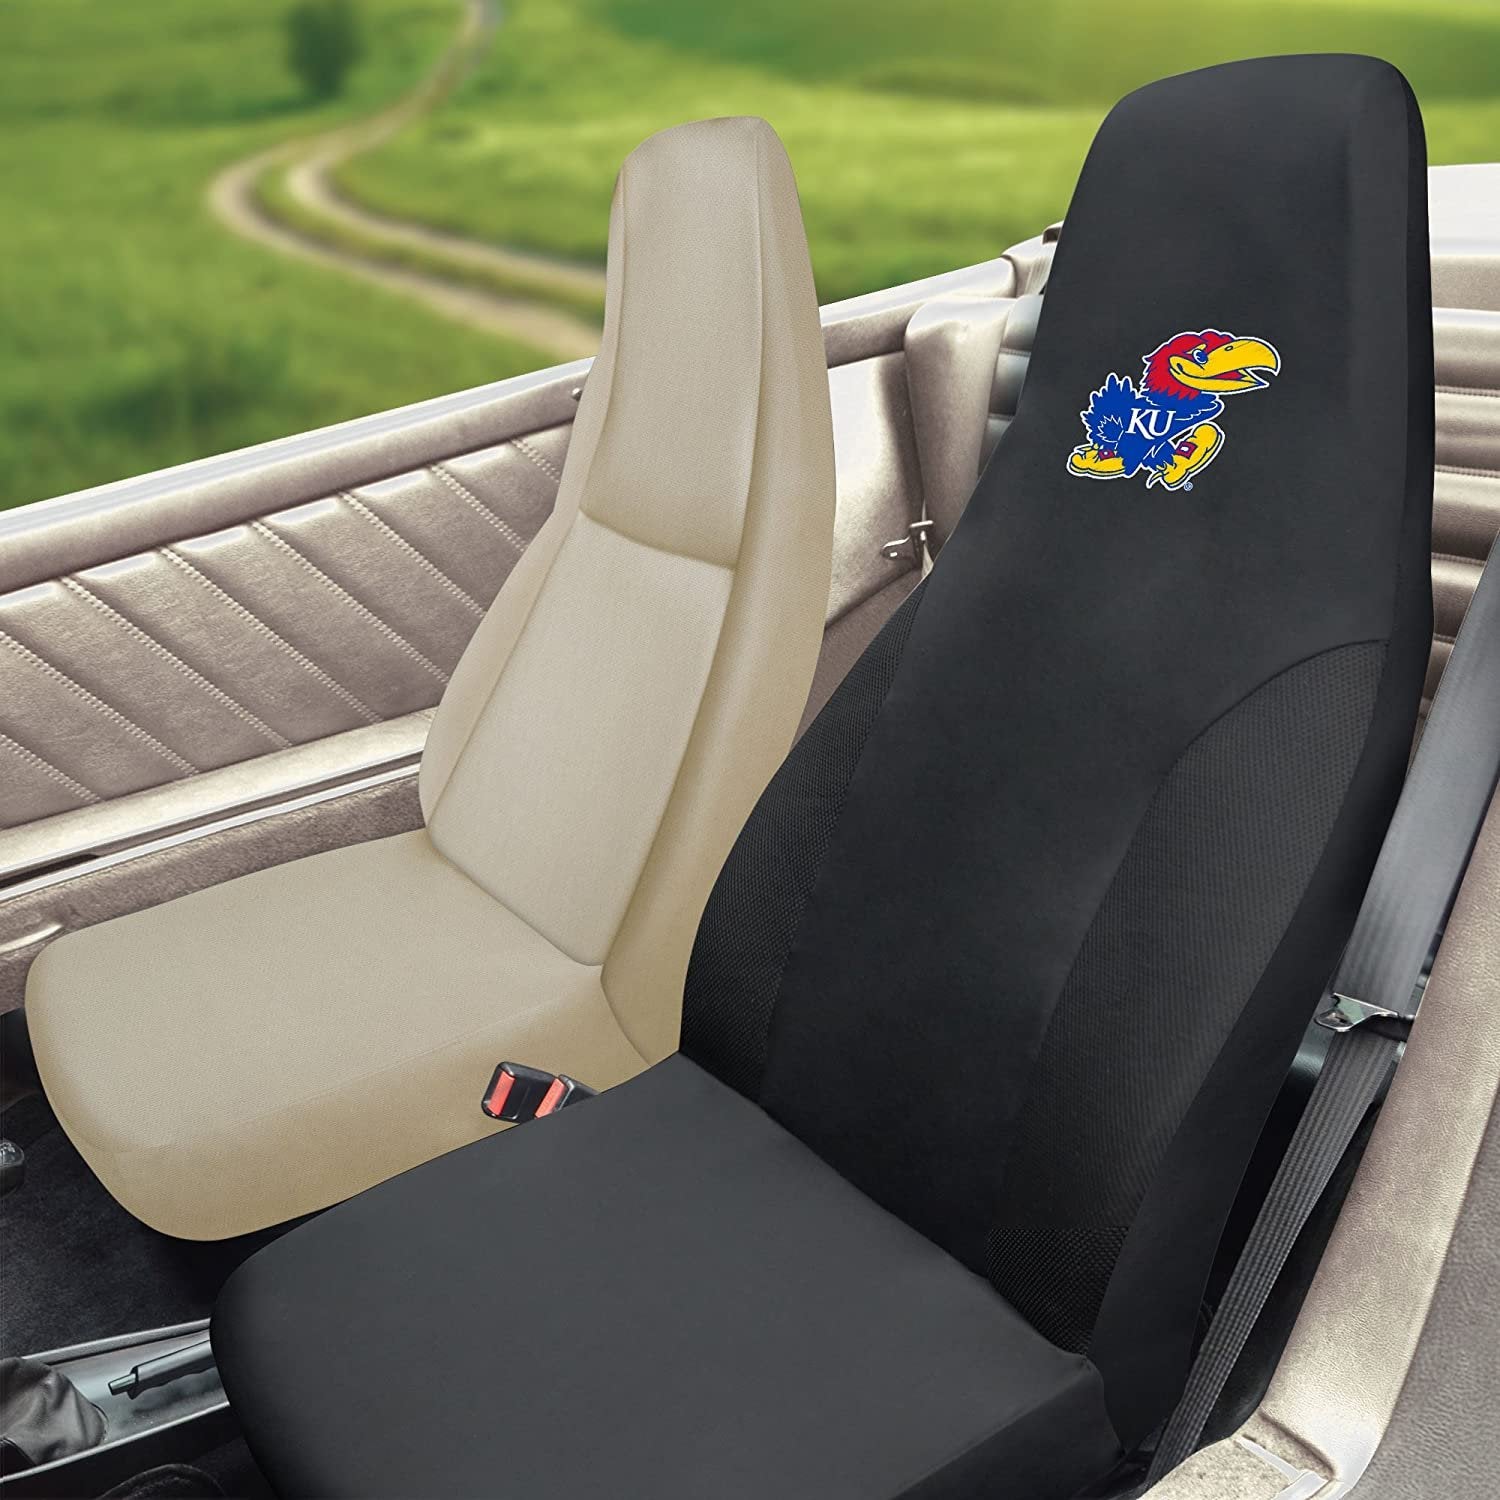 FANMATS - 15092 NCAA University of Kansas Jayhawks Polyester Seat Cover 20"x48"